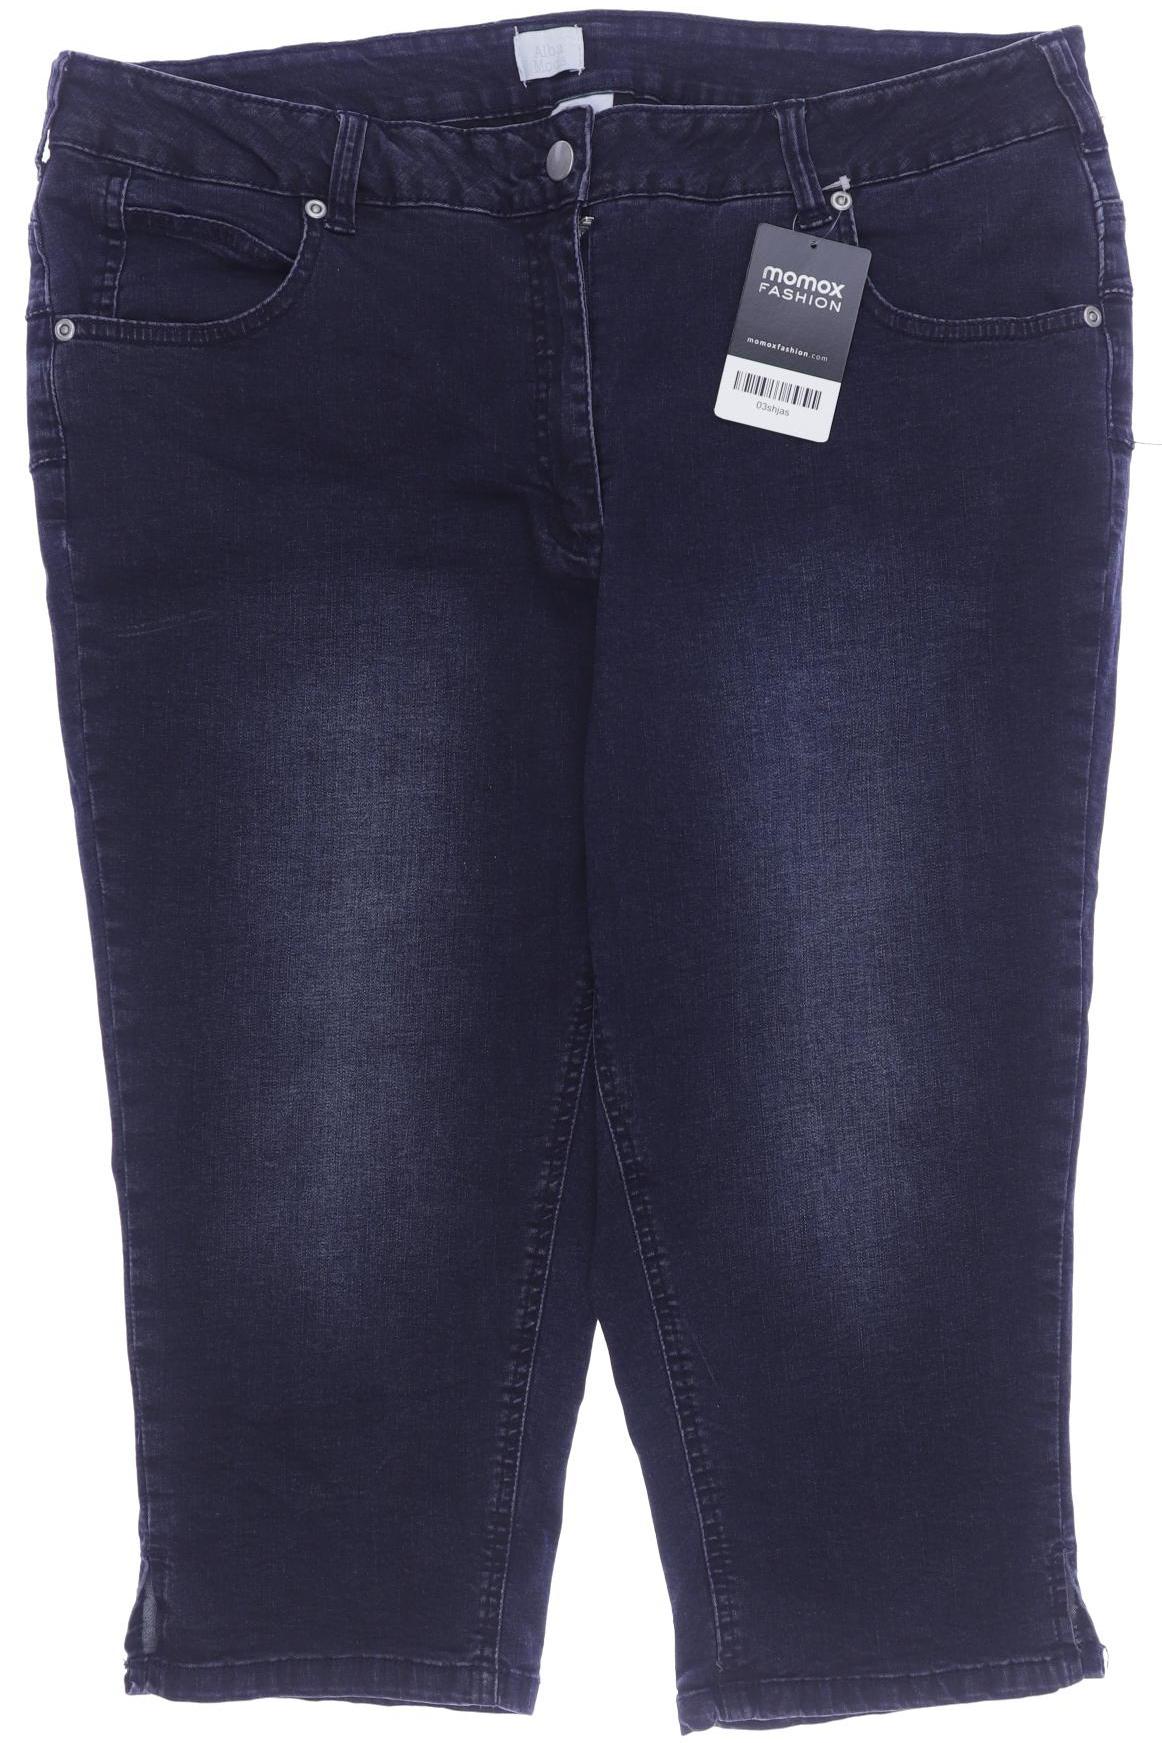 Alba Moda Damen Jeans, marineblau von alba moda